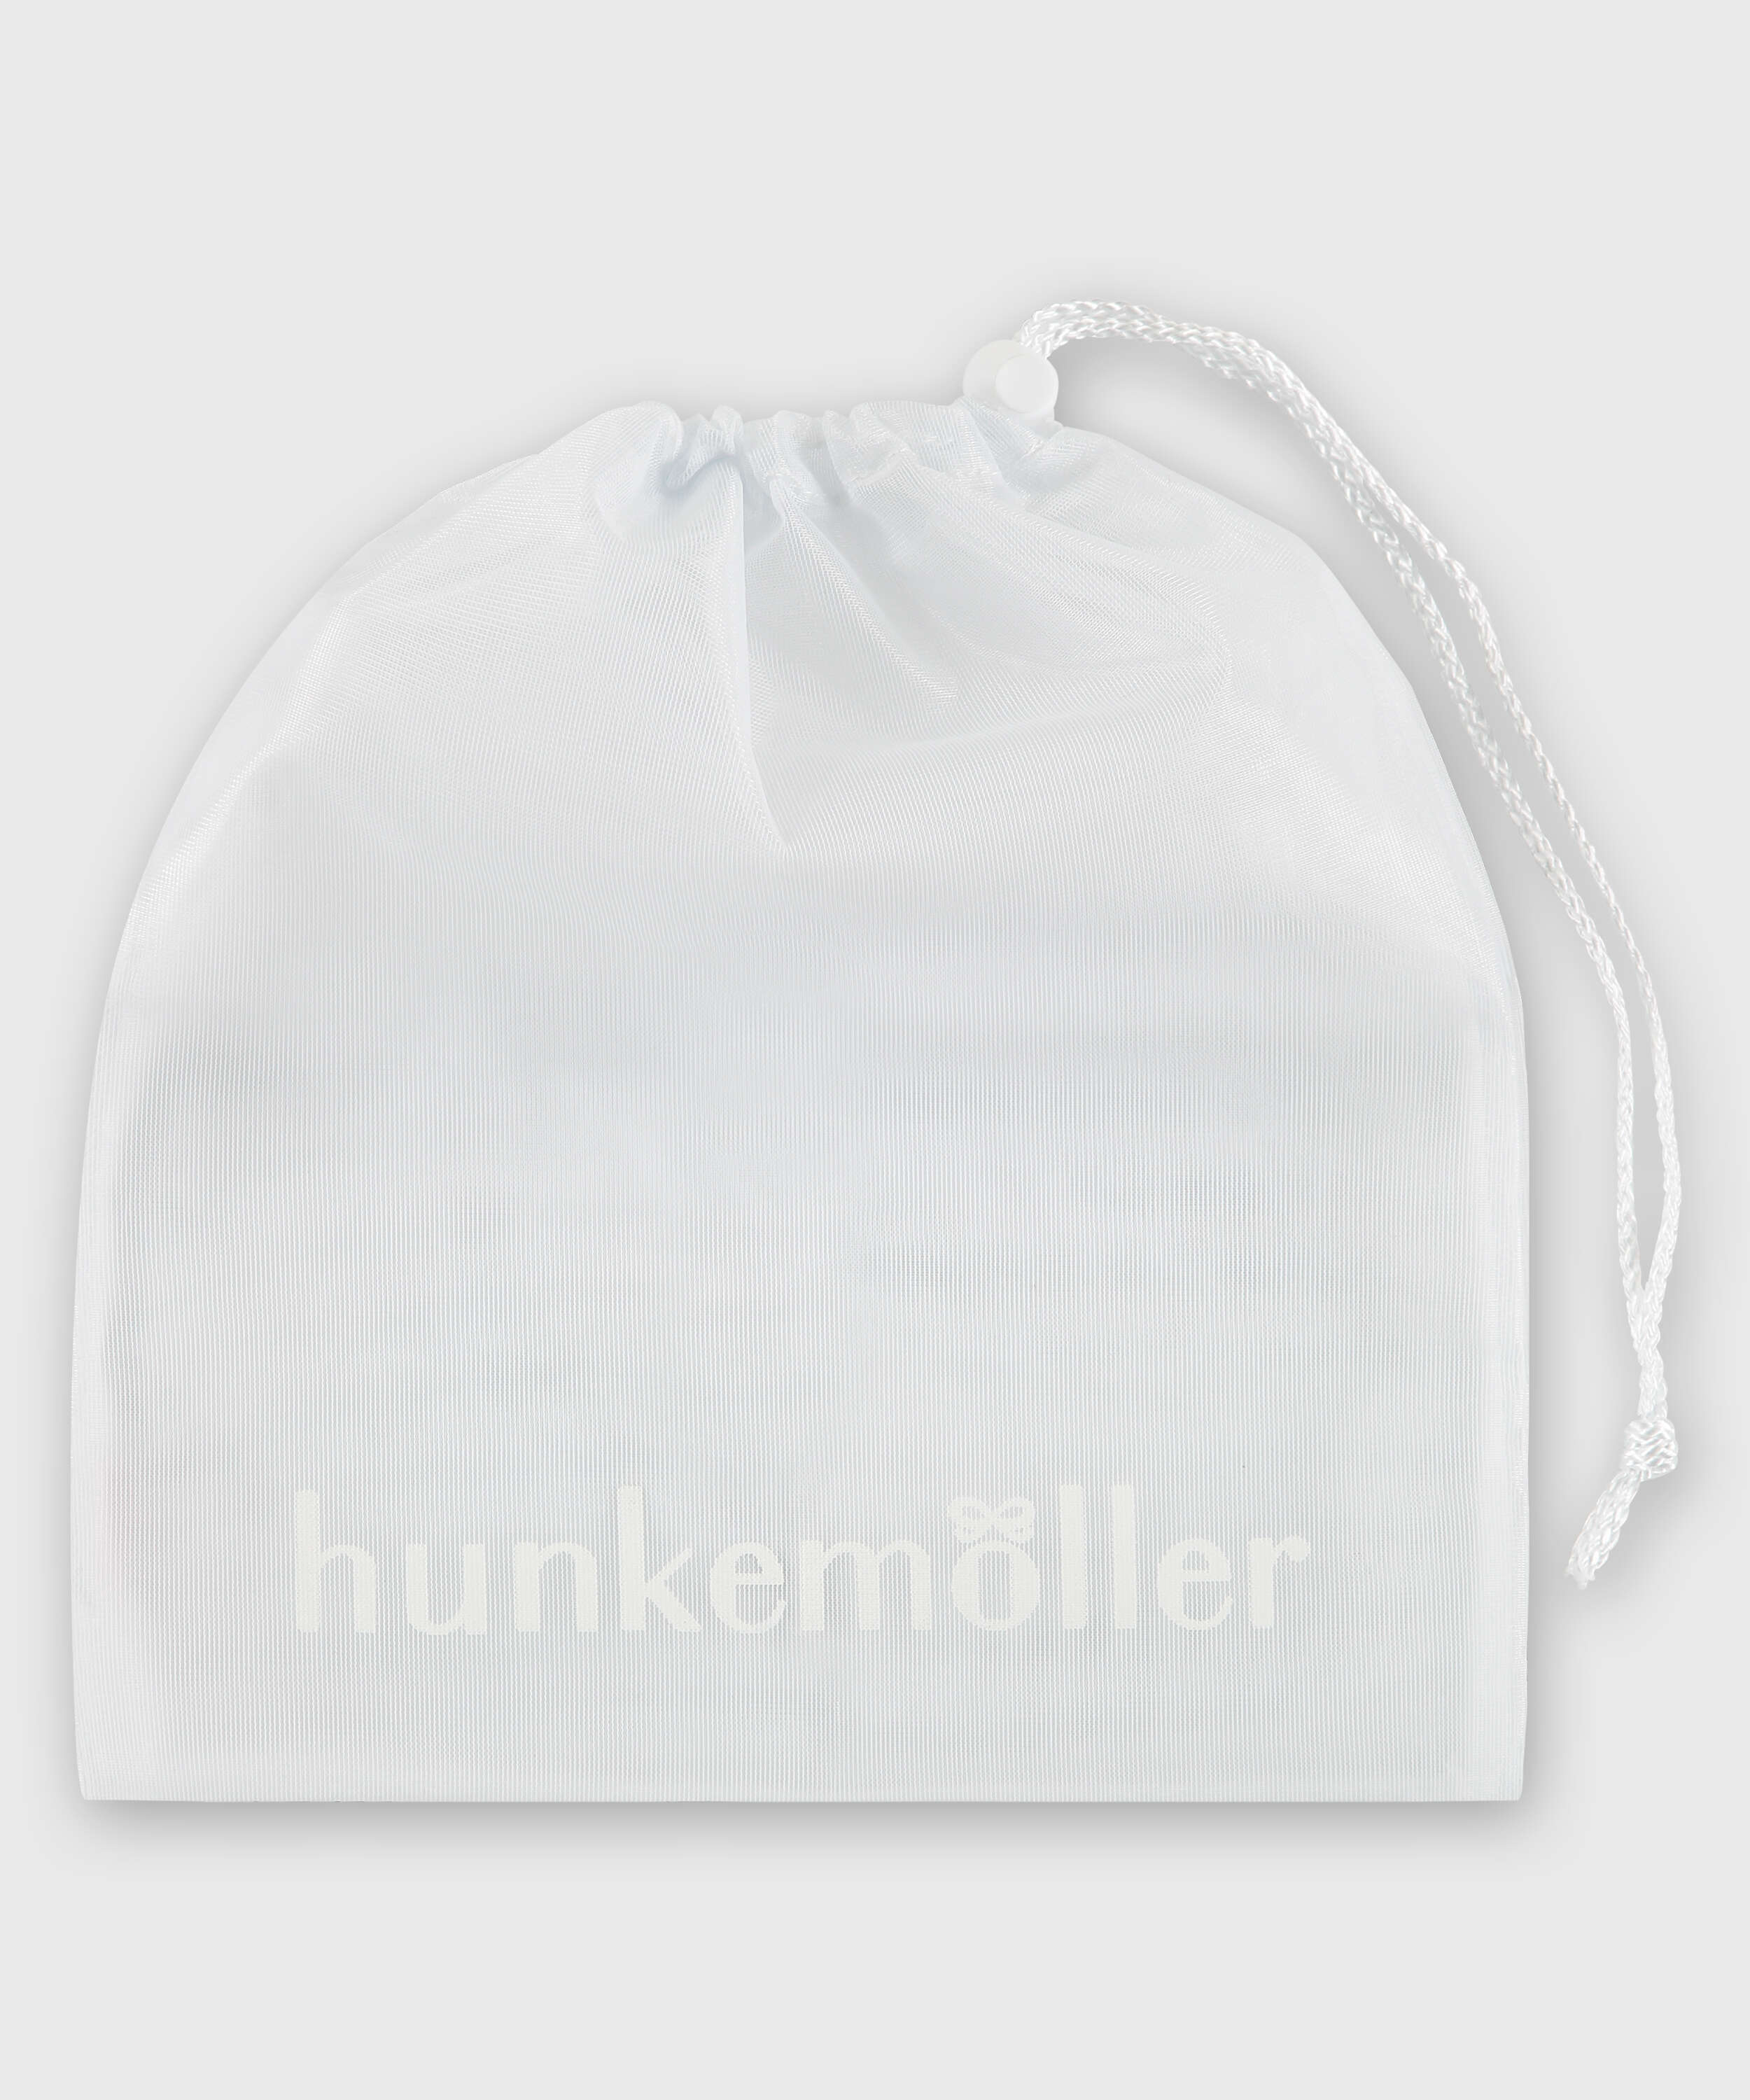 Hosiery bag drawstring, White, main